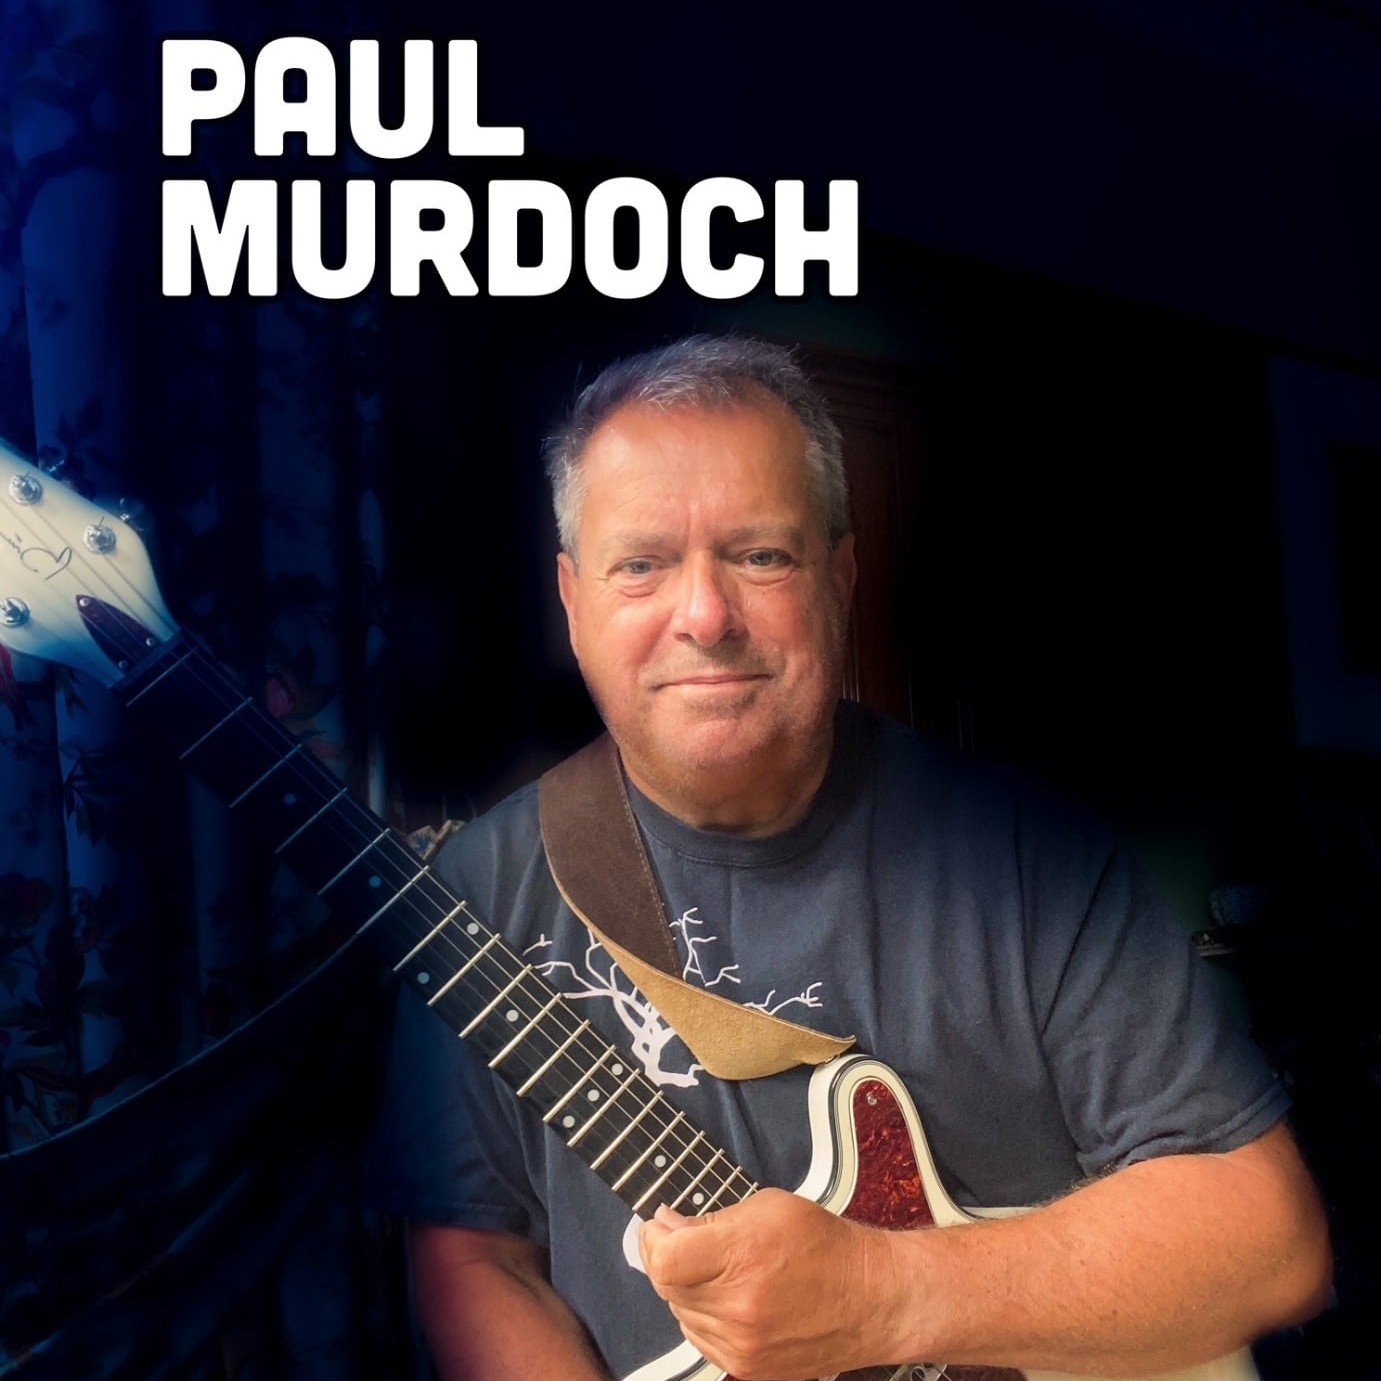 Paul Murdoch plays the Inn on Loch Lomond